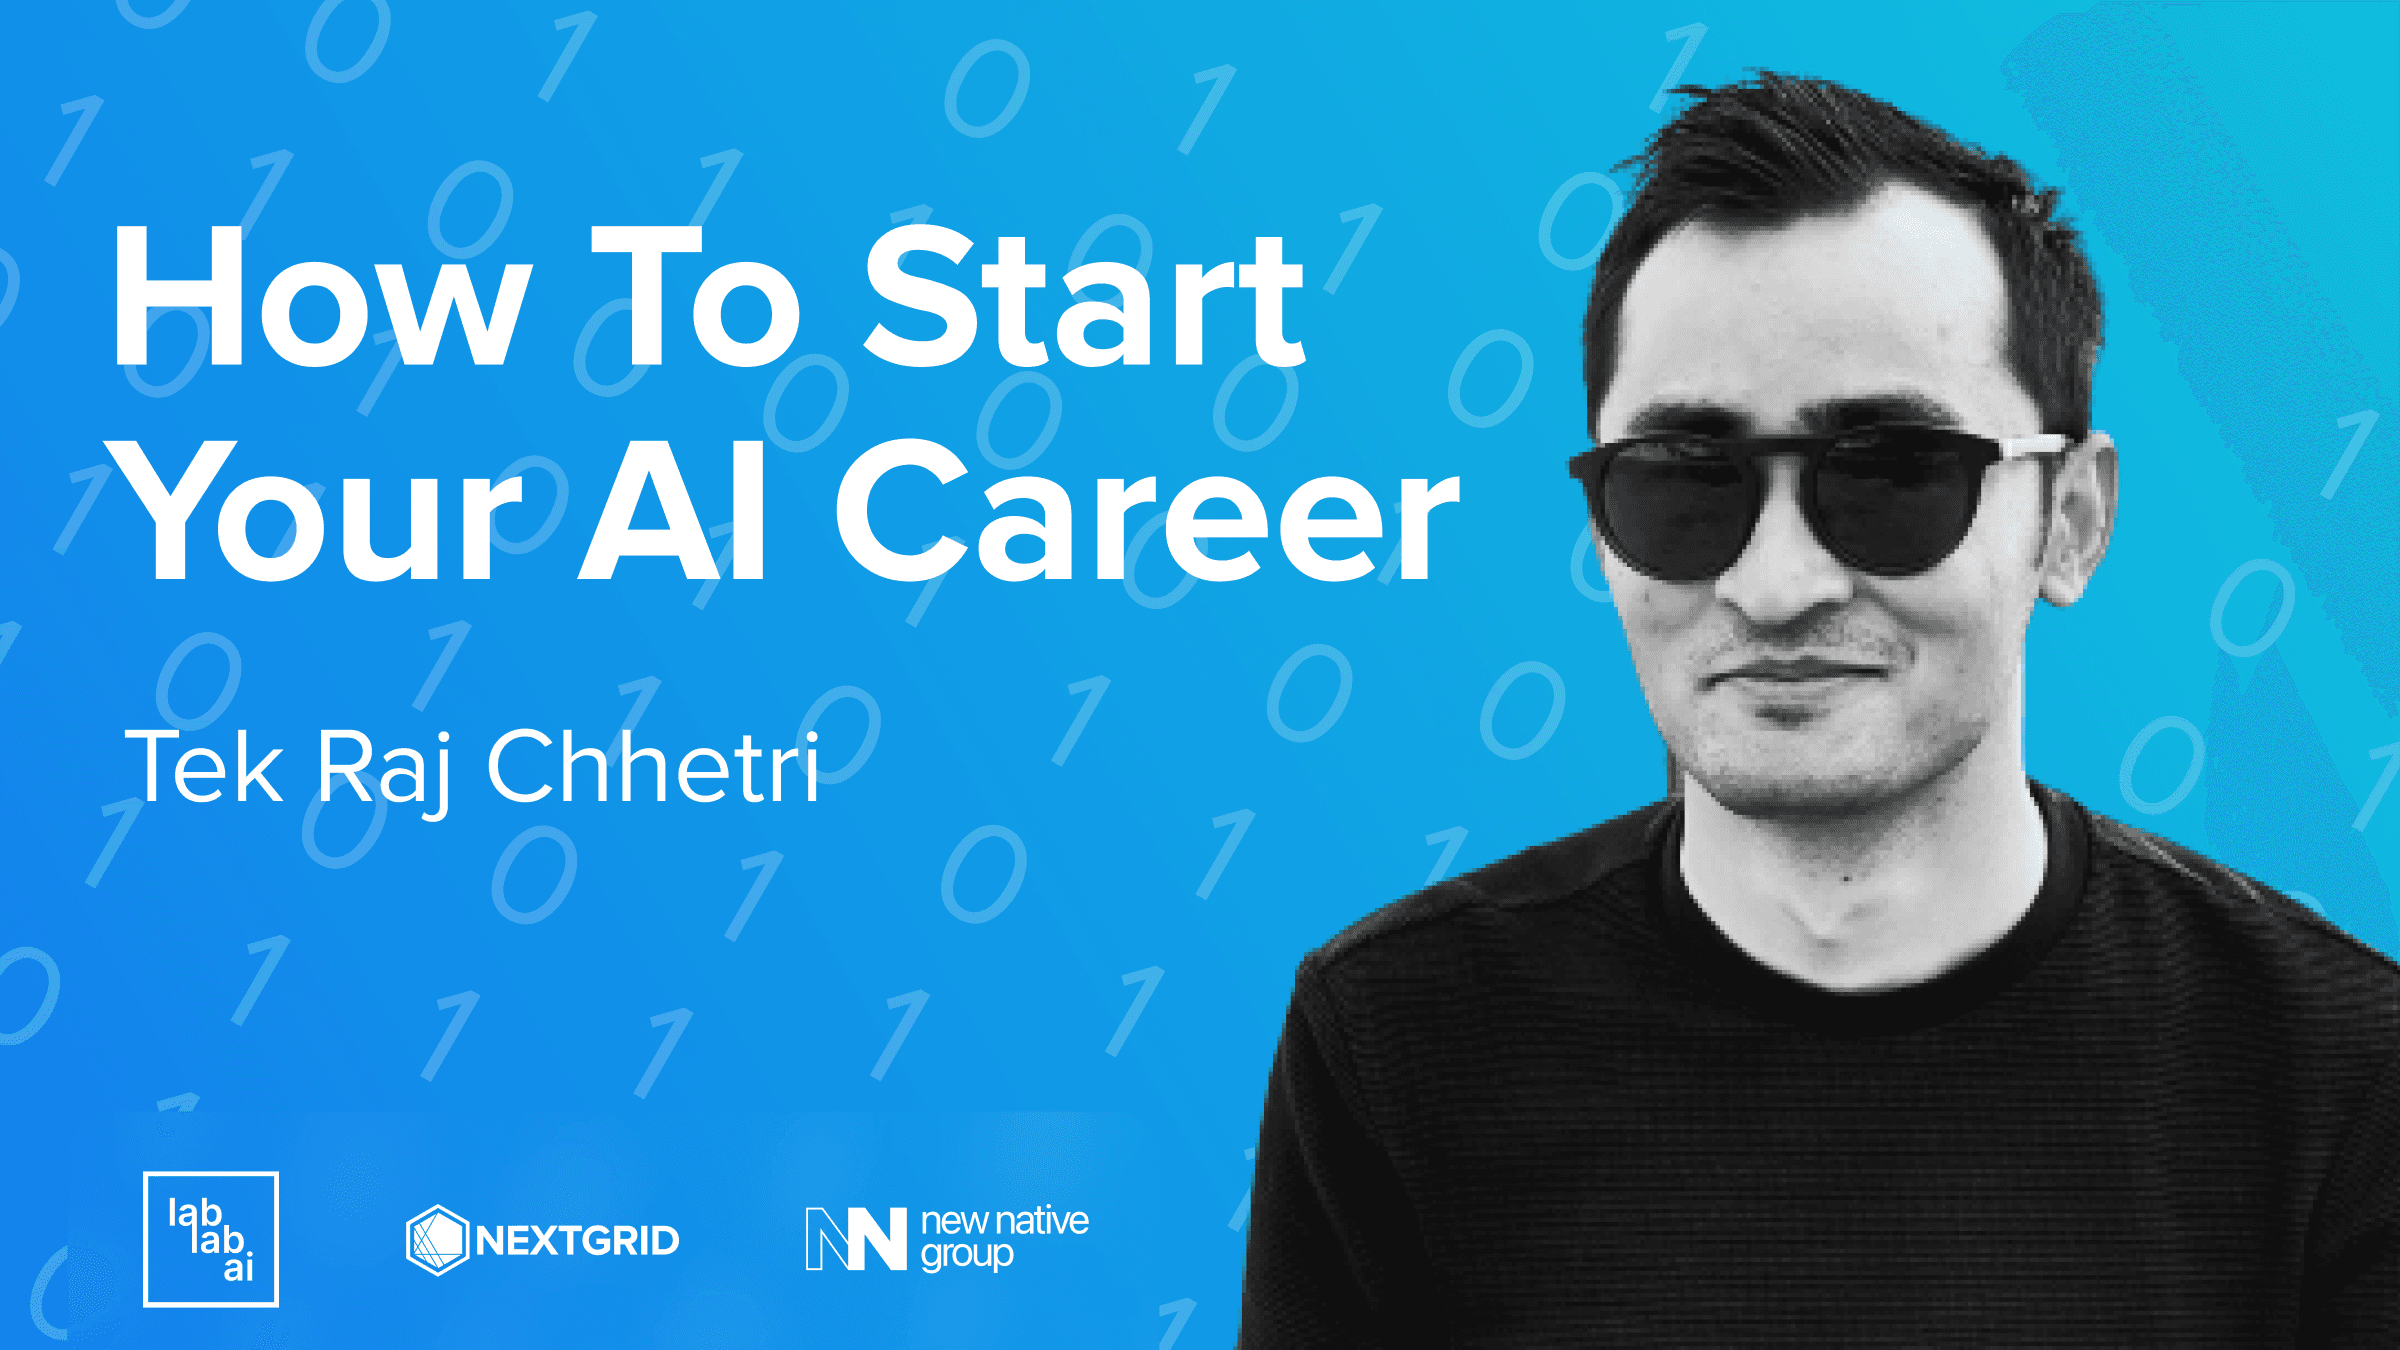 Tek Raj Chhetri: How To Start Your AI Career